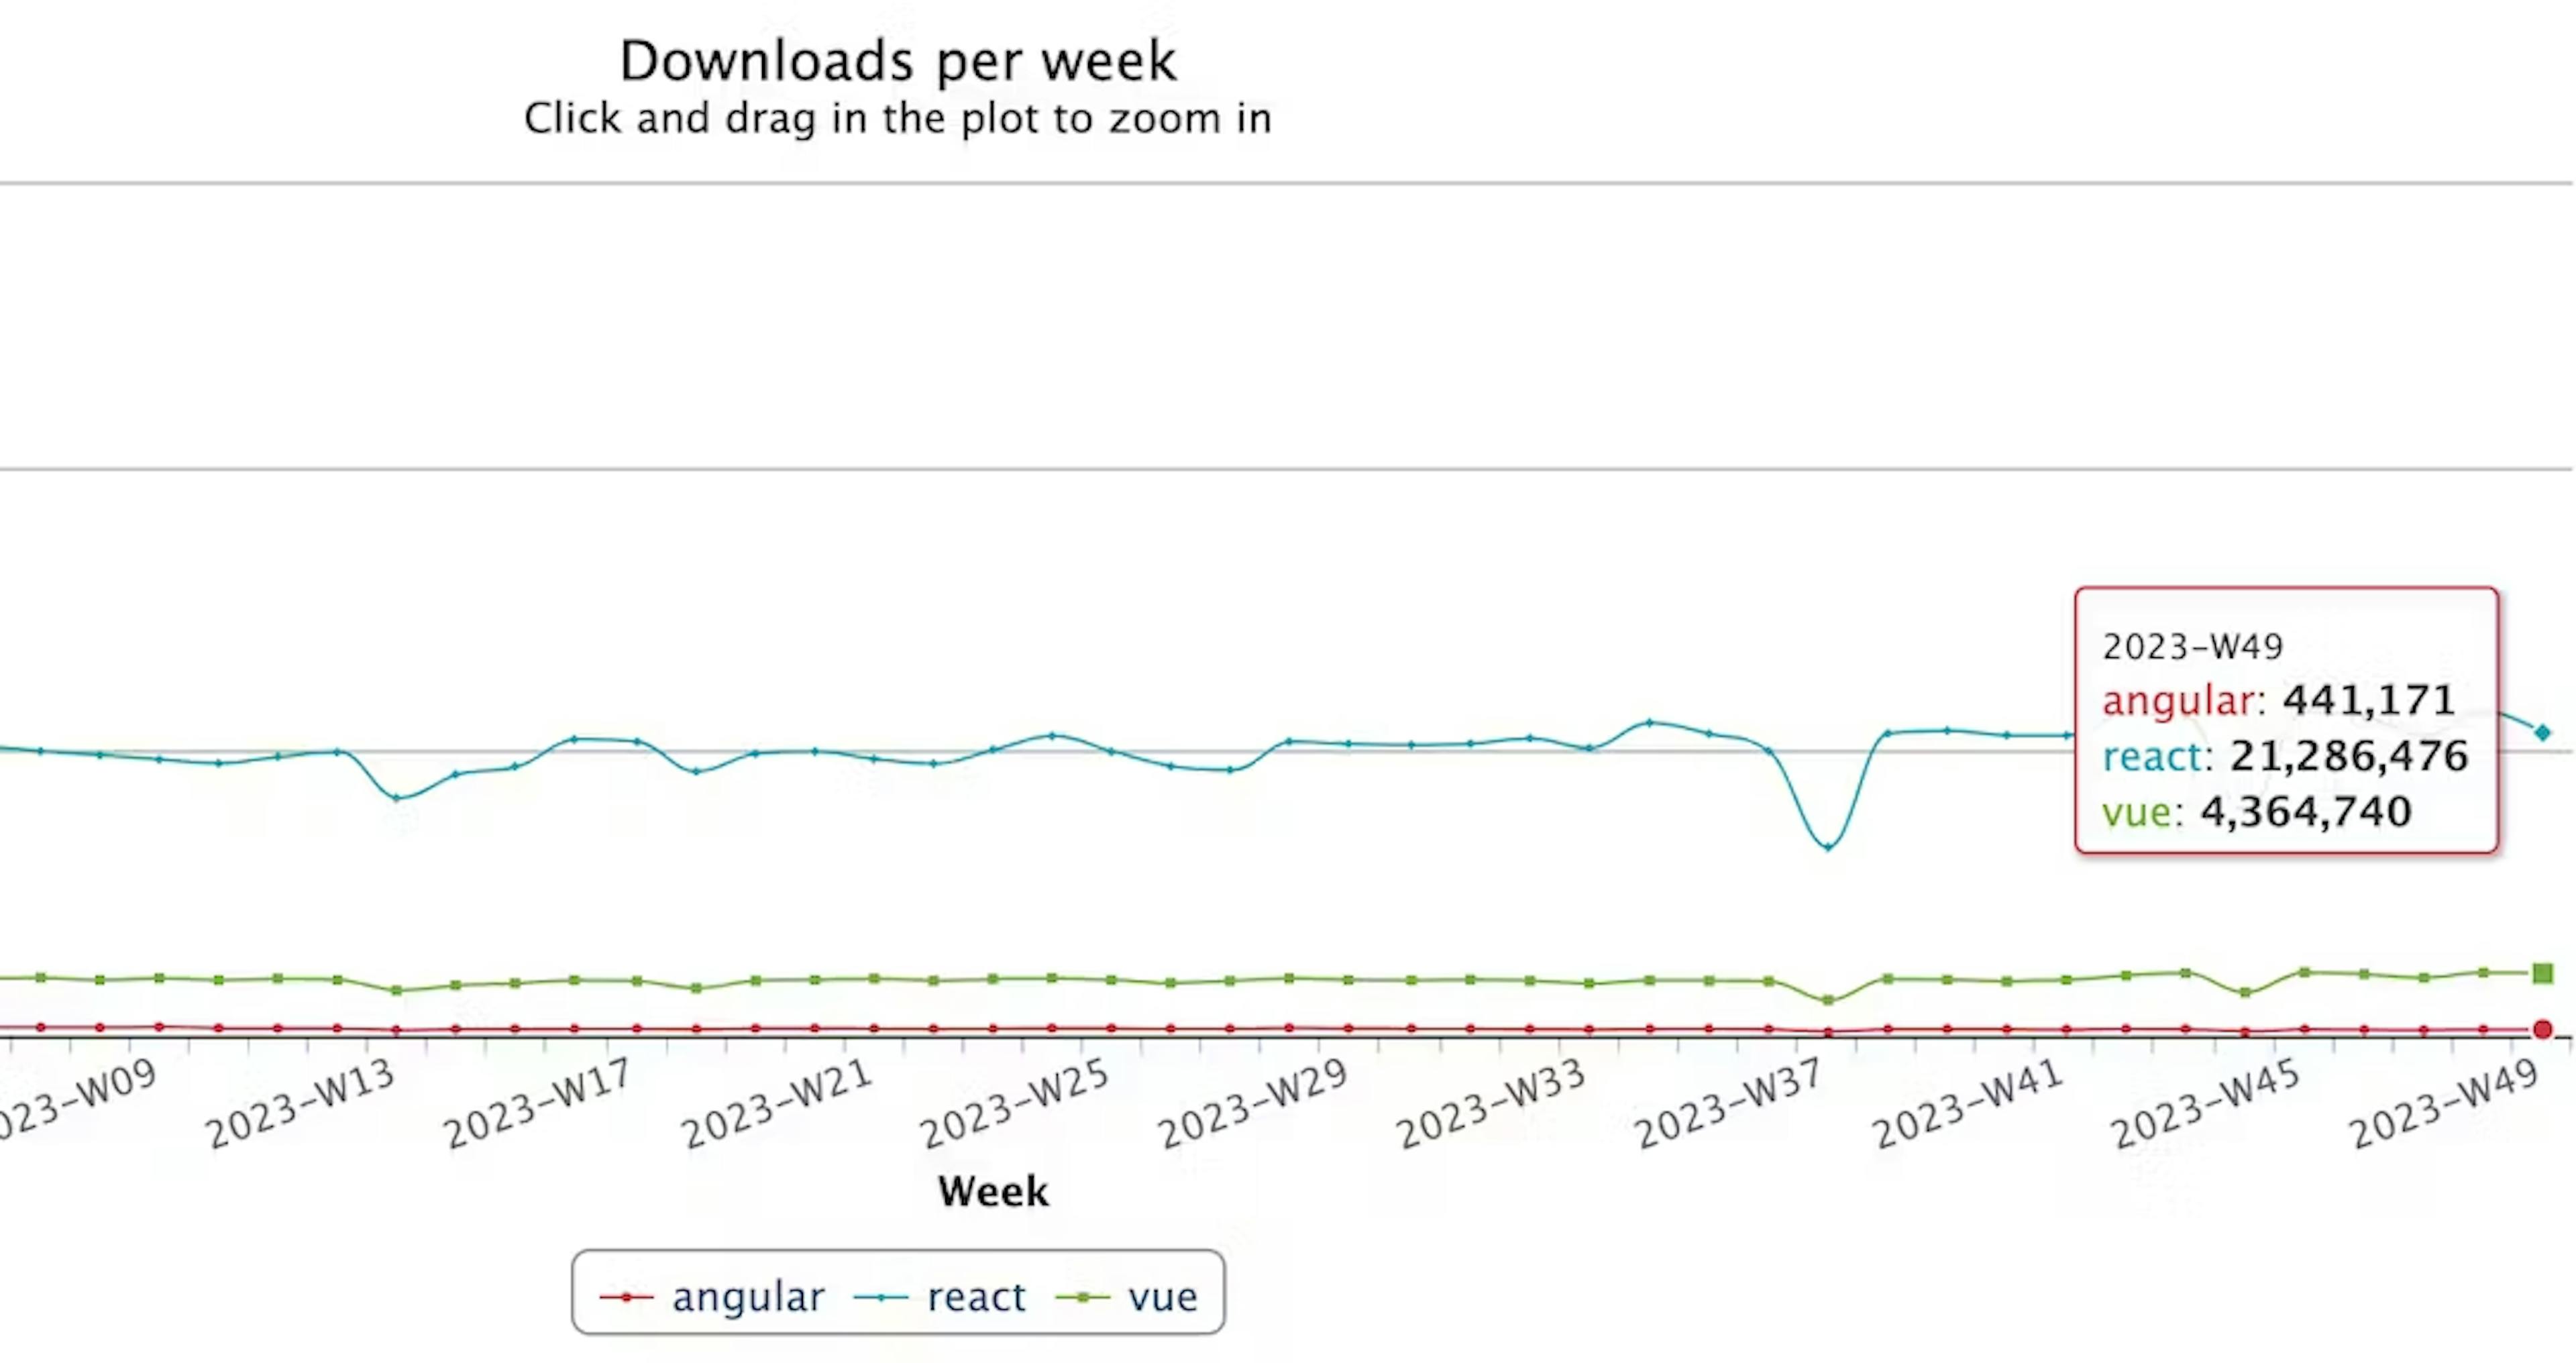 Download per week react angular vue